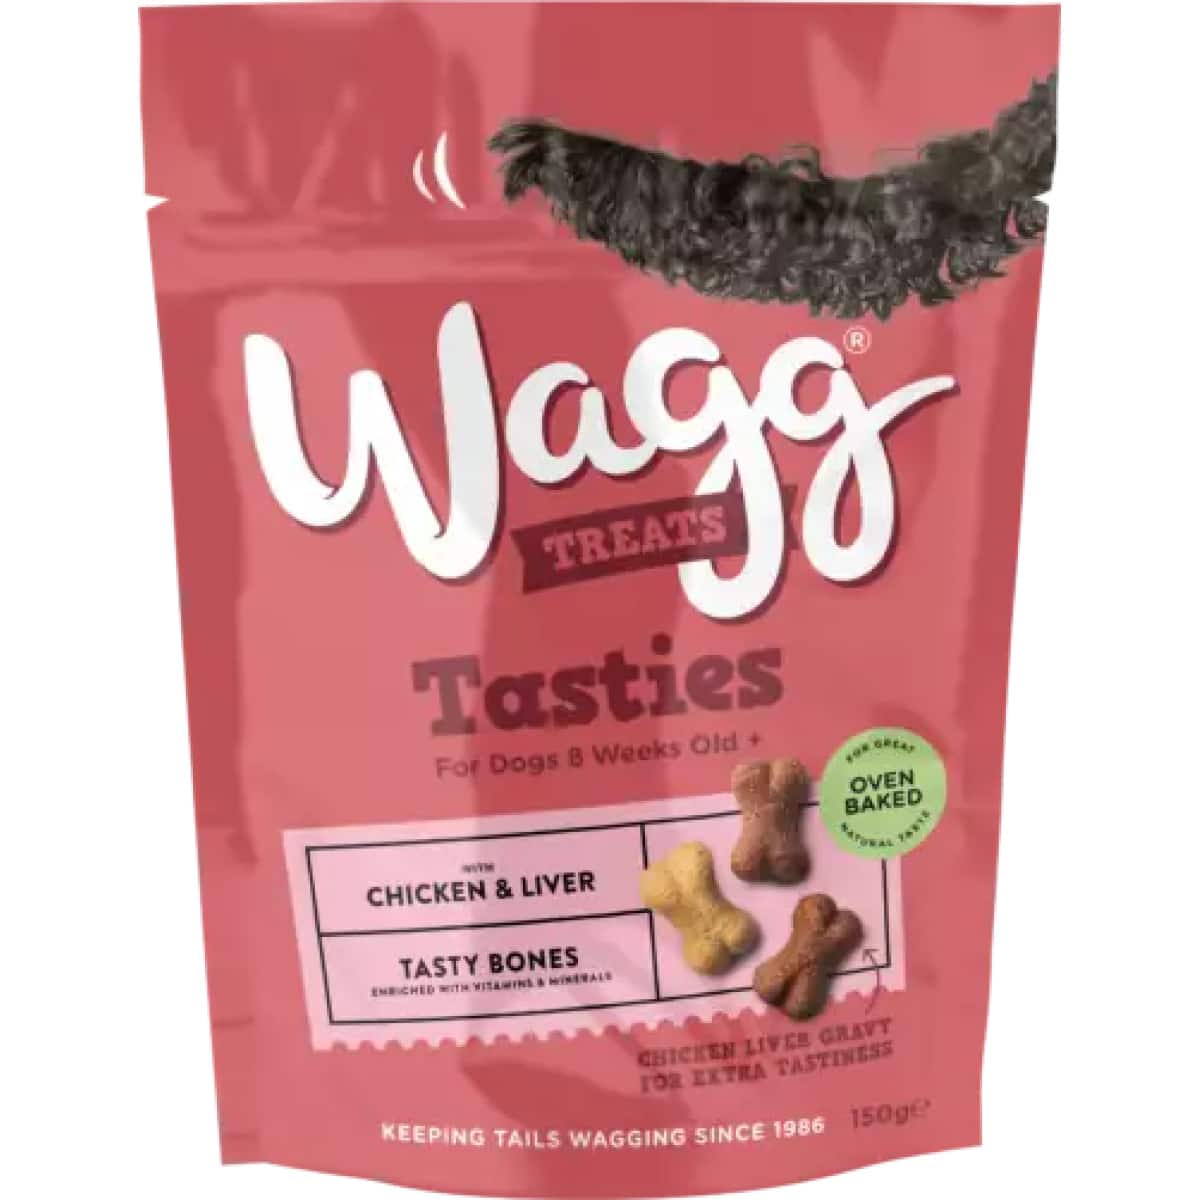 Wagg Dog Treats - Tasty Bones 125g Main Image